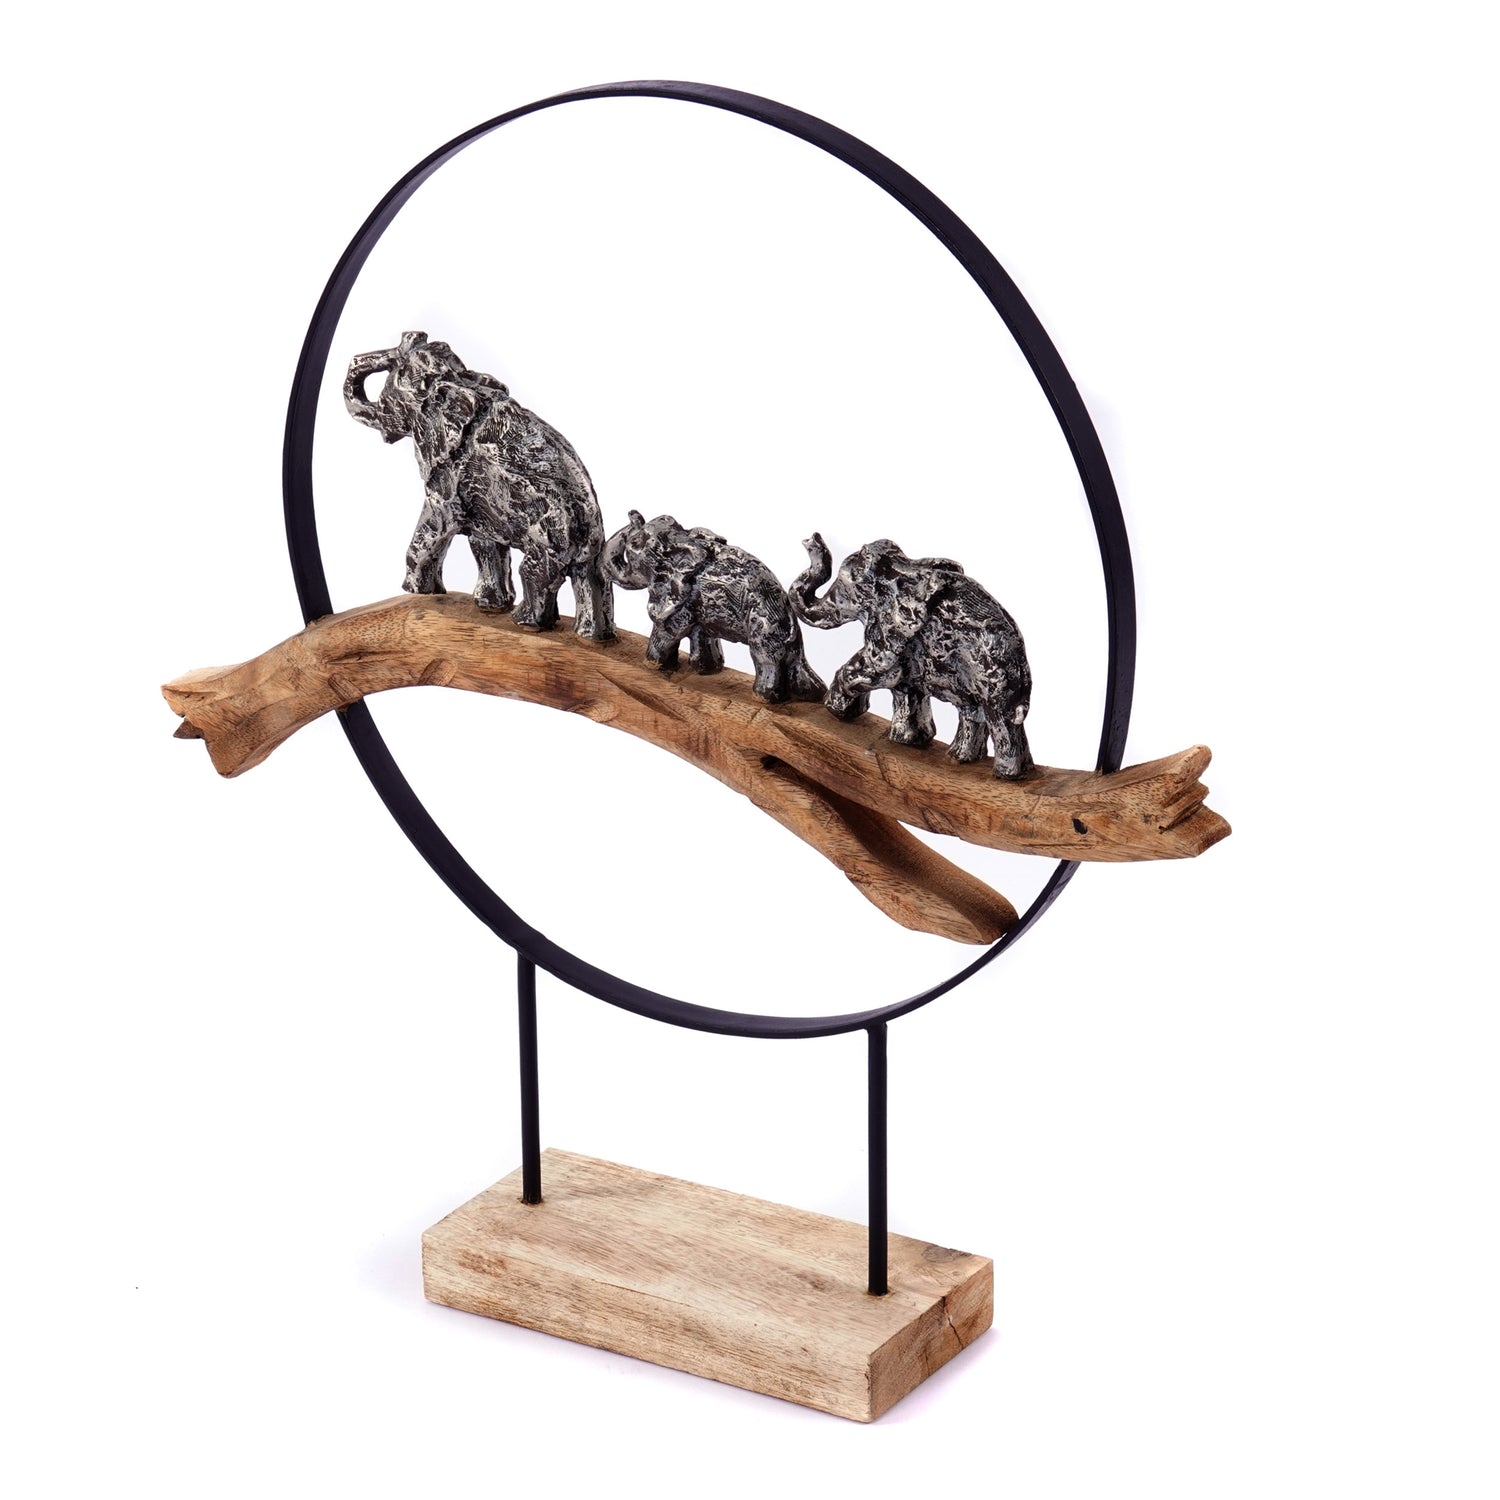 SKULPTUR "ELEPHANTS IN RING" | Mangoholz | Deko Aufsteller Elefanten